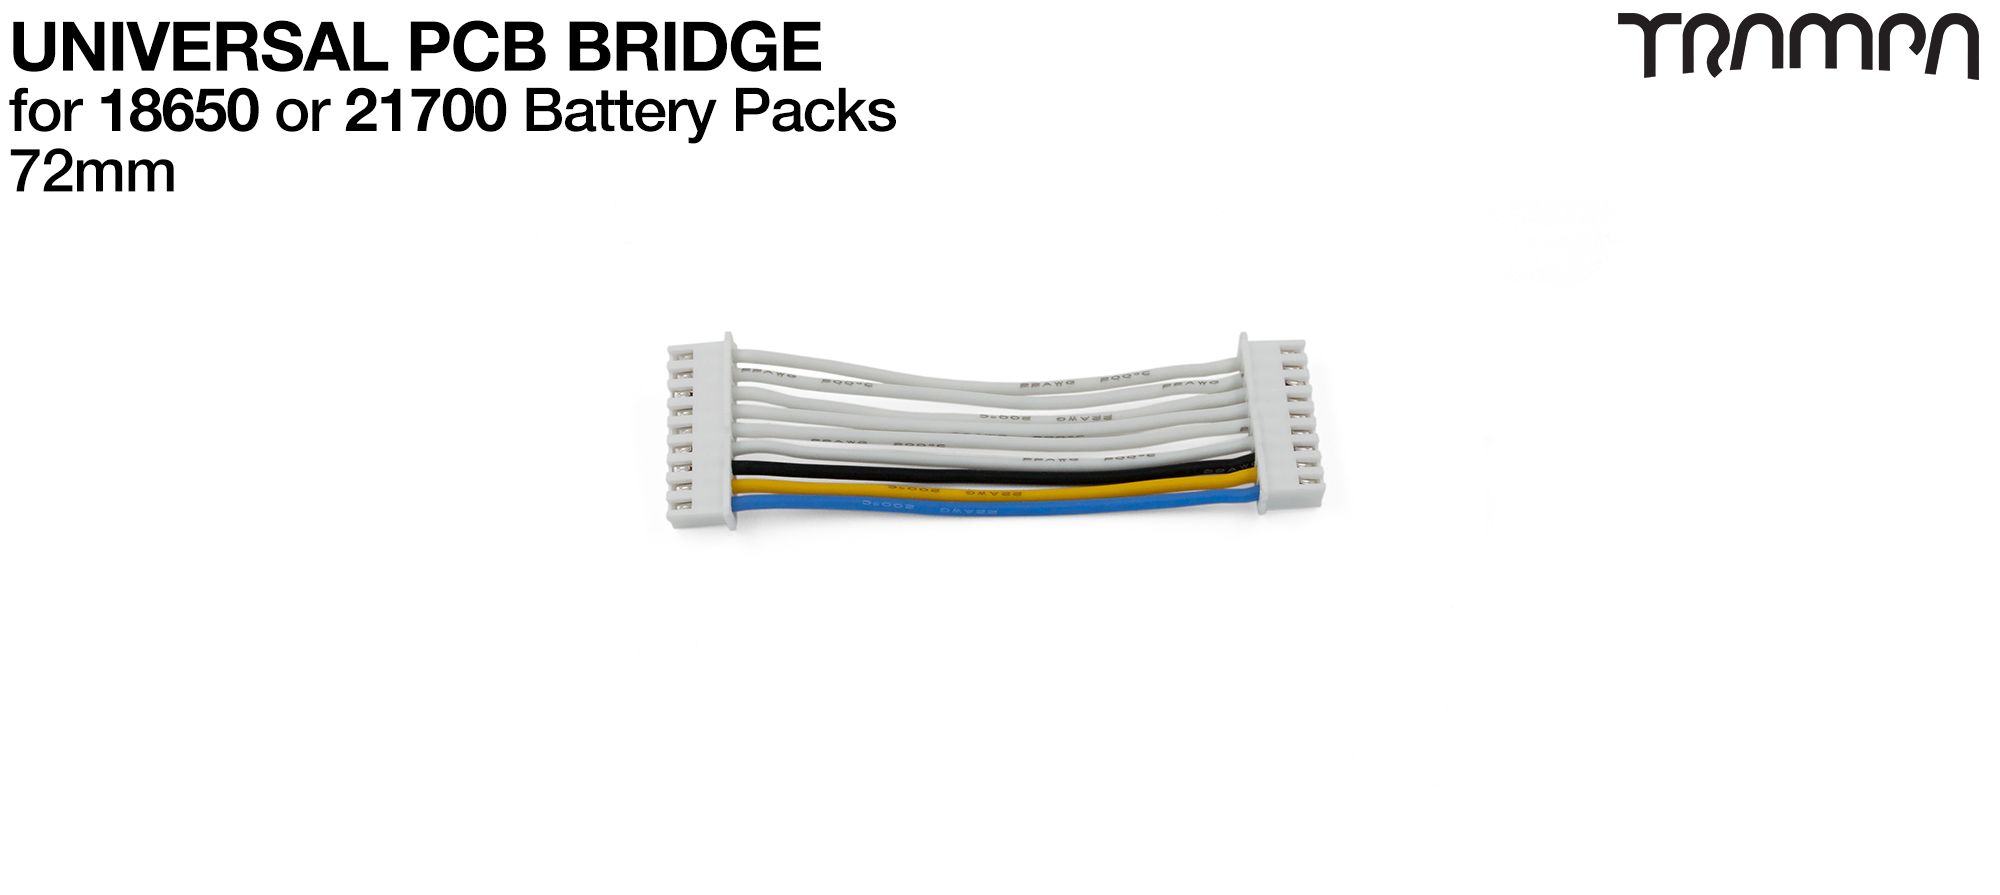 Universal PCB BRIDGE Cable for PCB Battery Packs